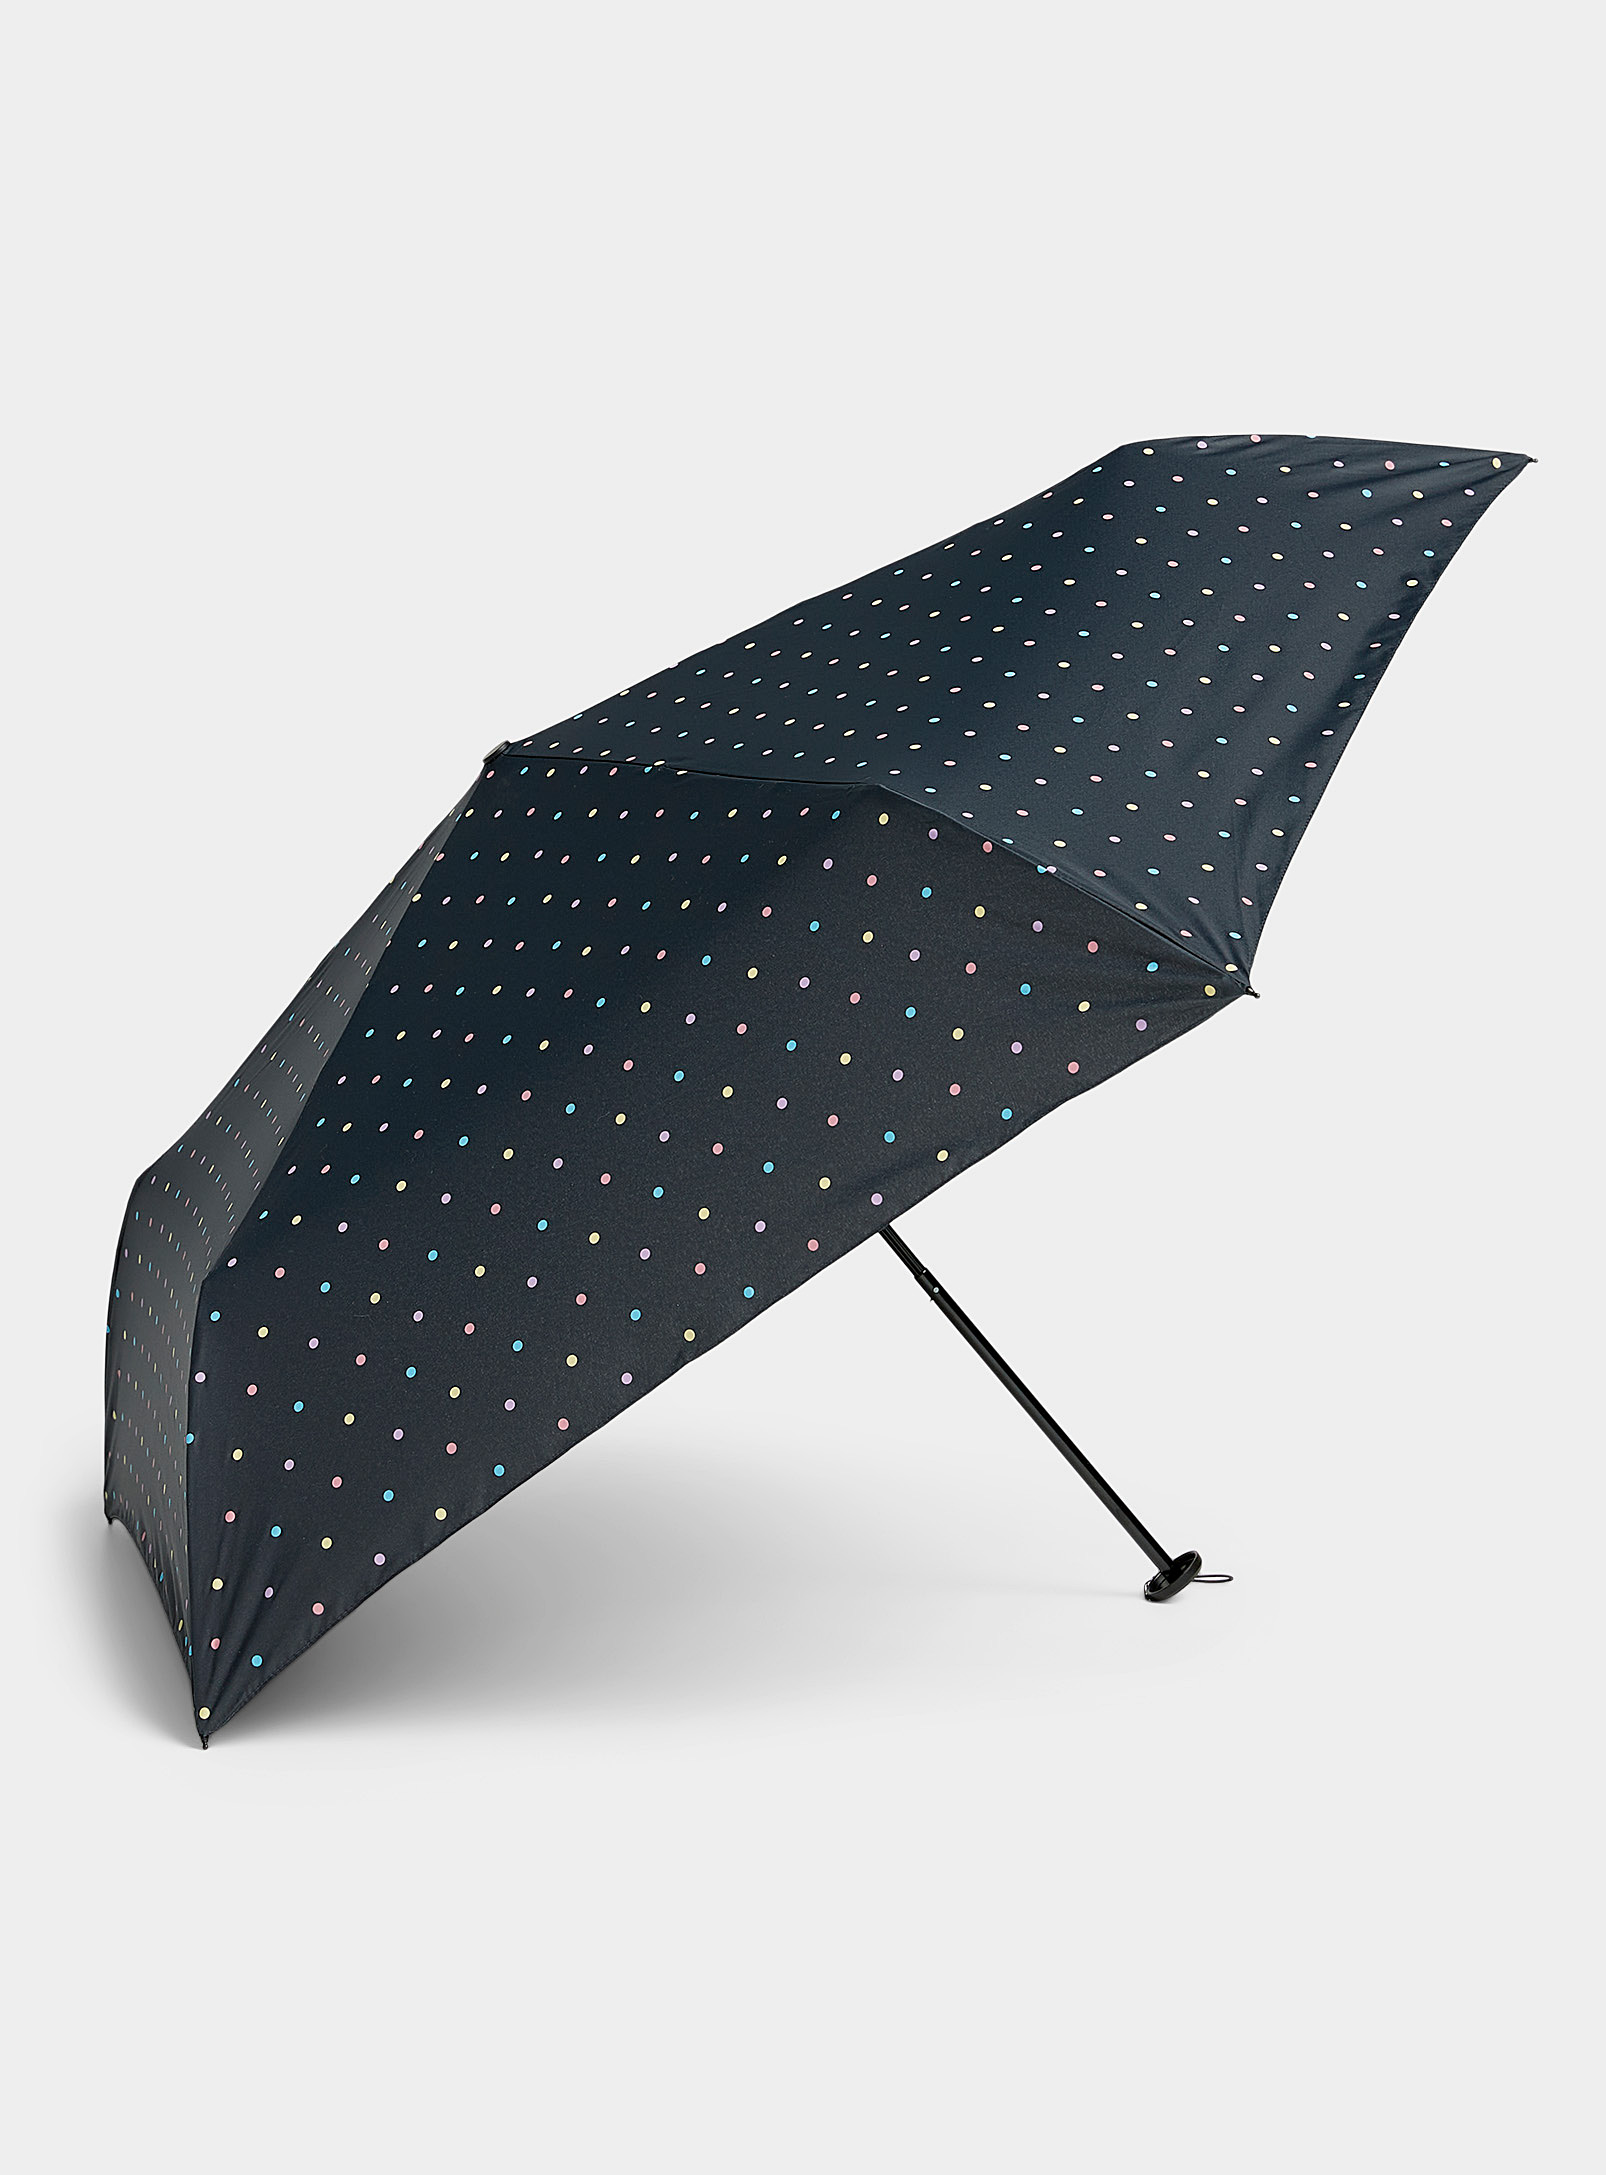 Fulton - Patterned ultra-compact umbrella